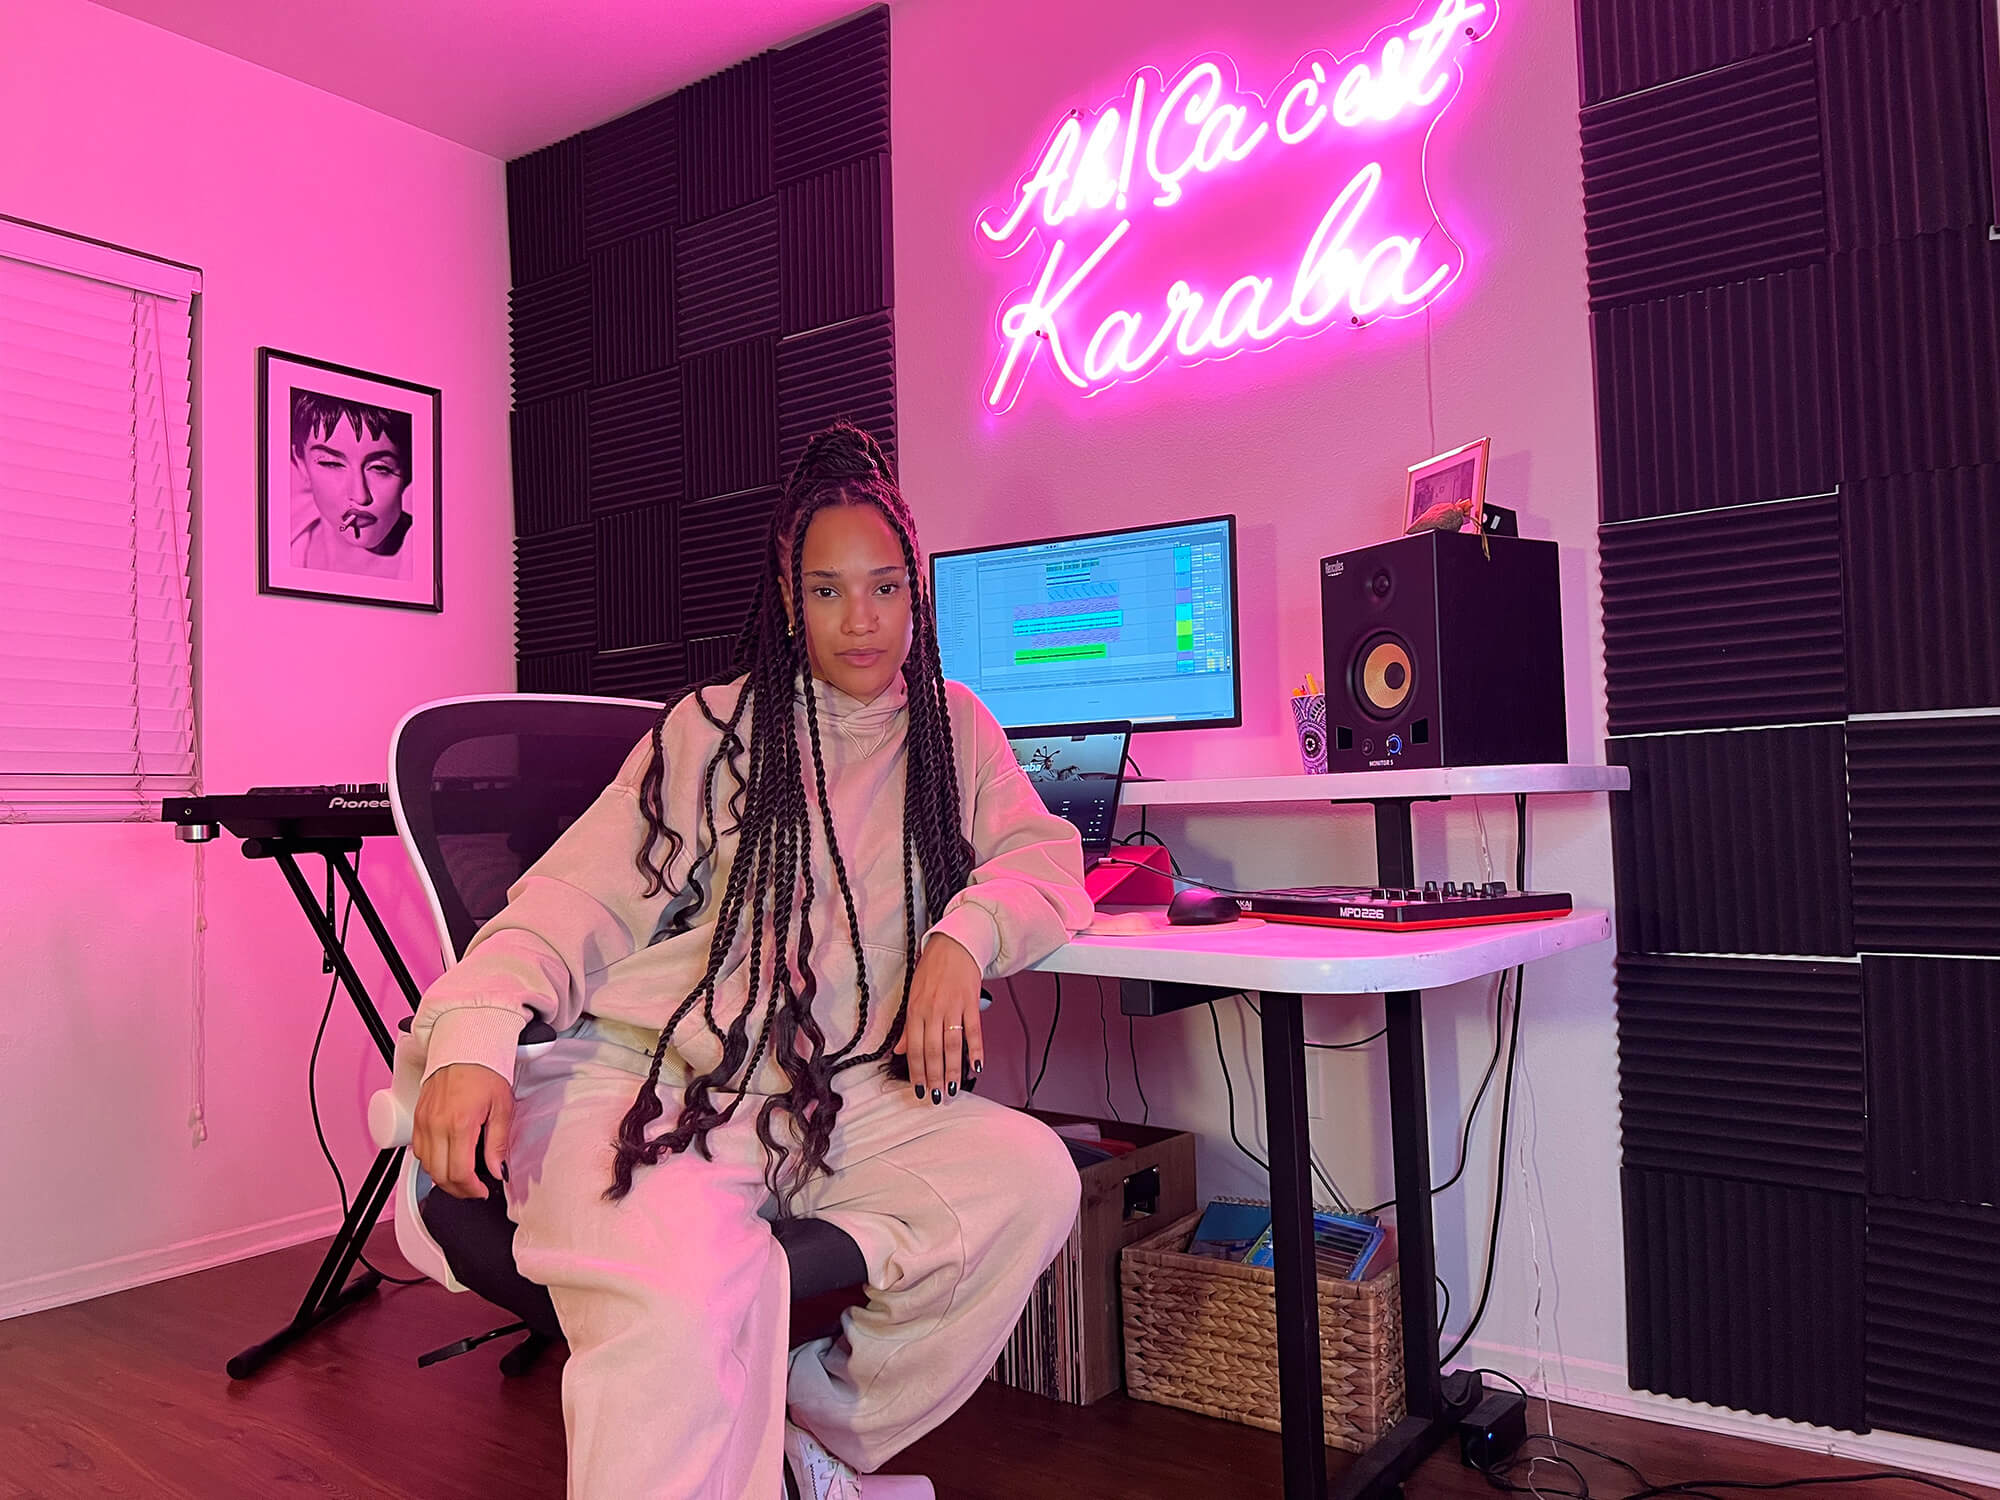 DJ Karaba in her studio